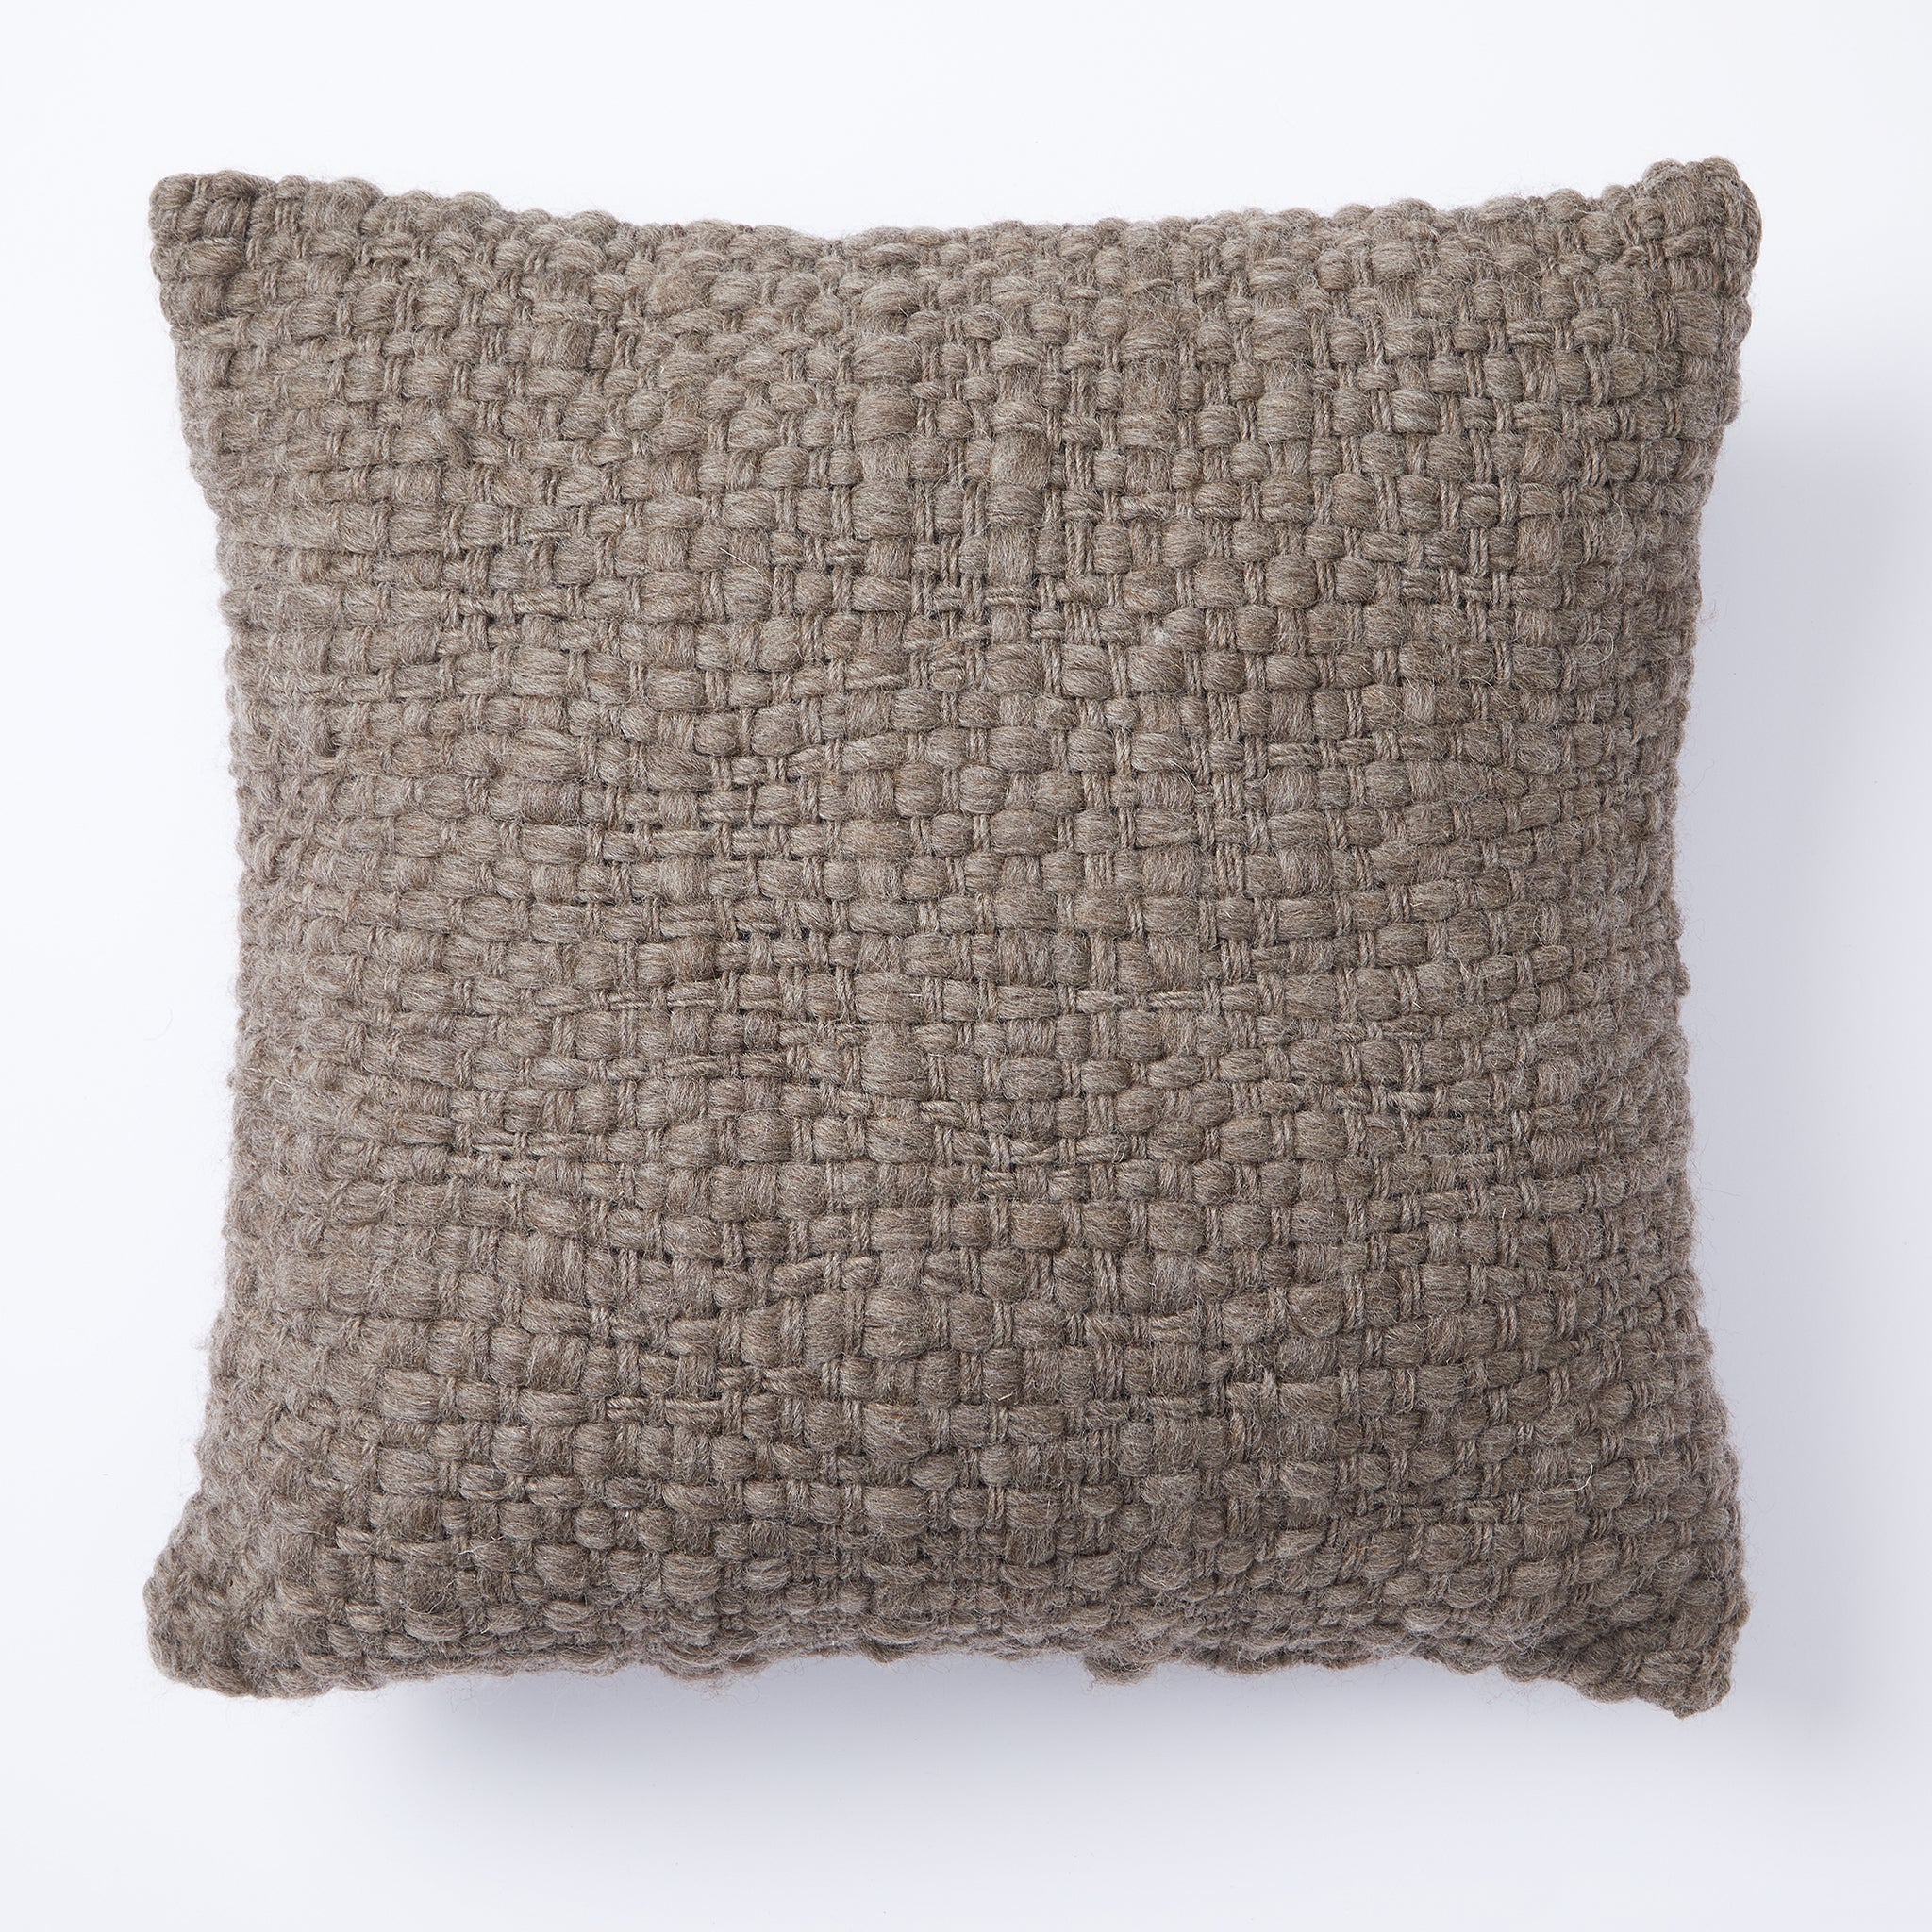 Cushion Sueno in grey-brown, 50x50cm